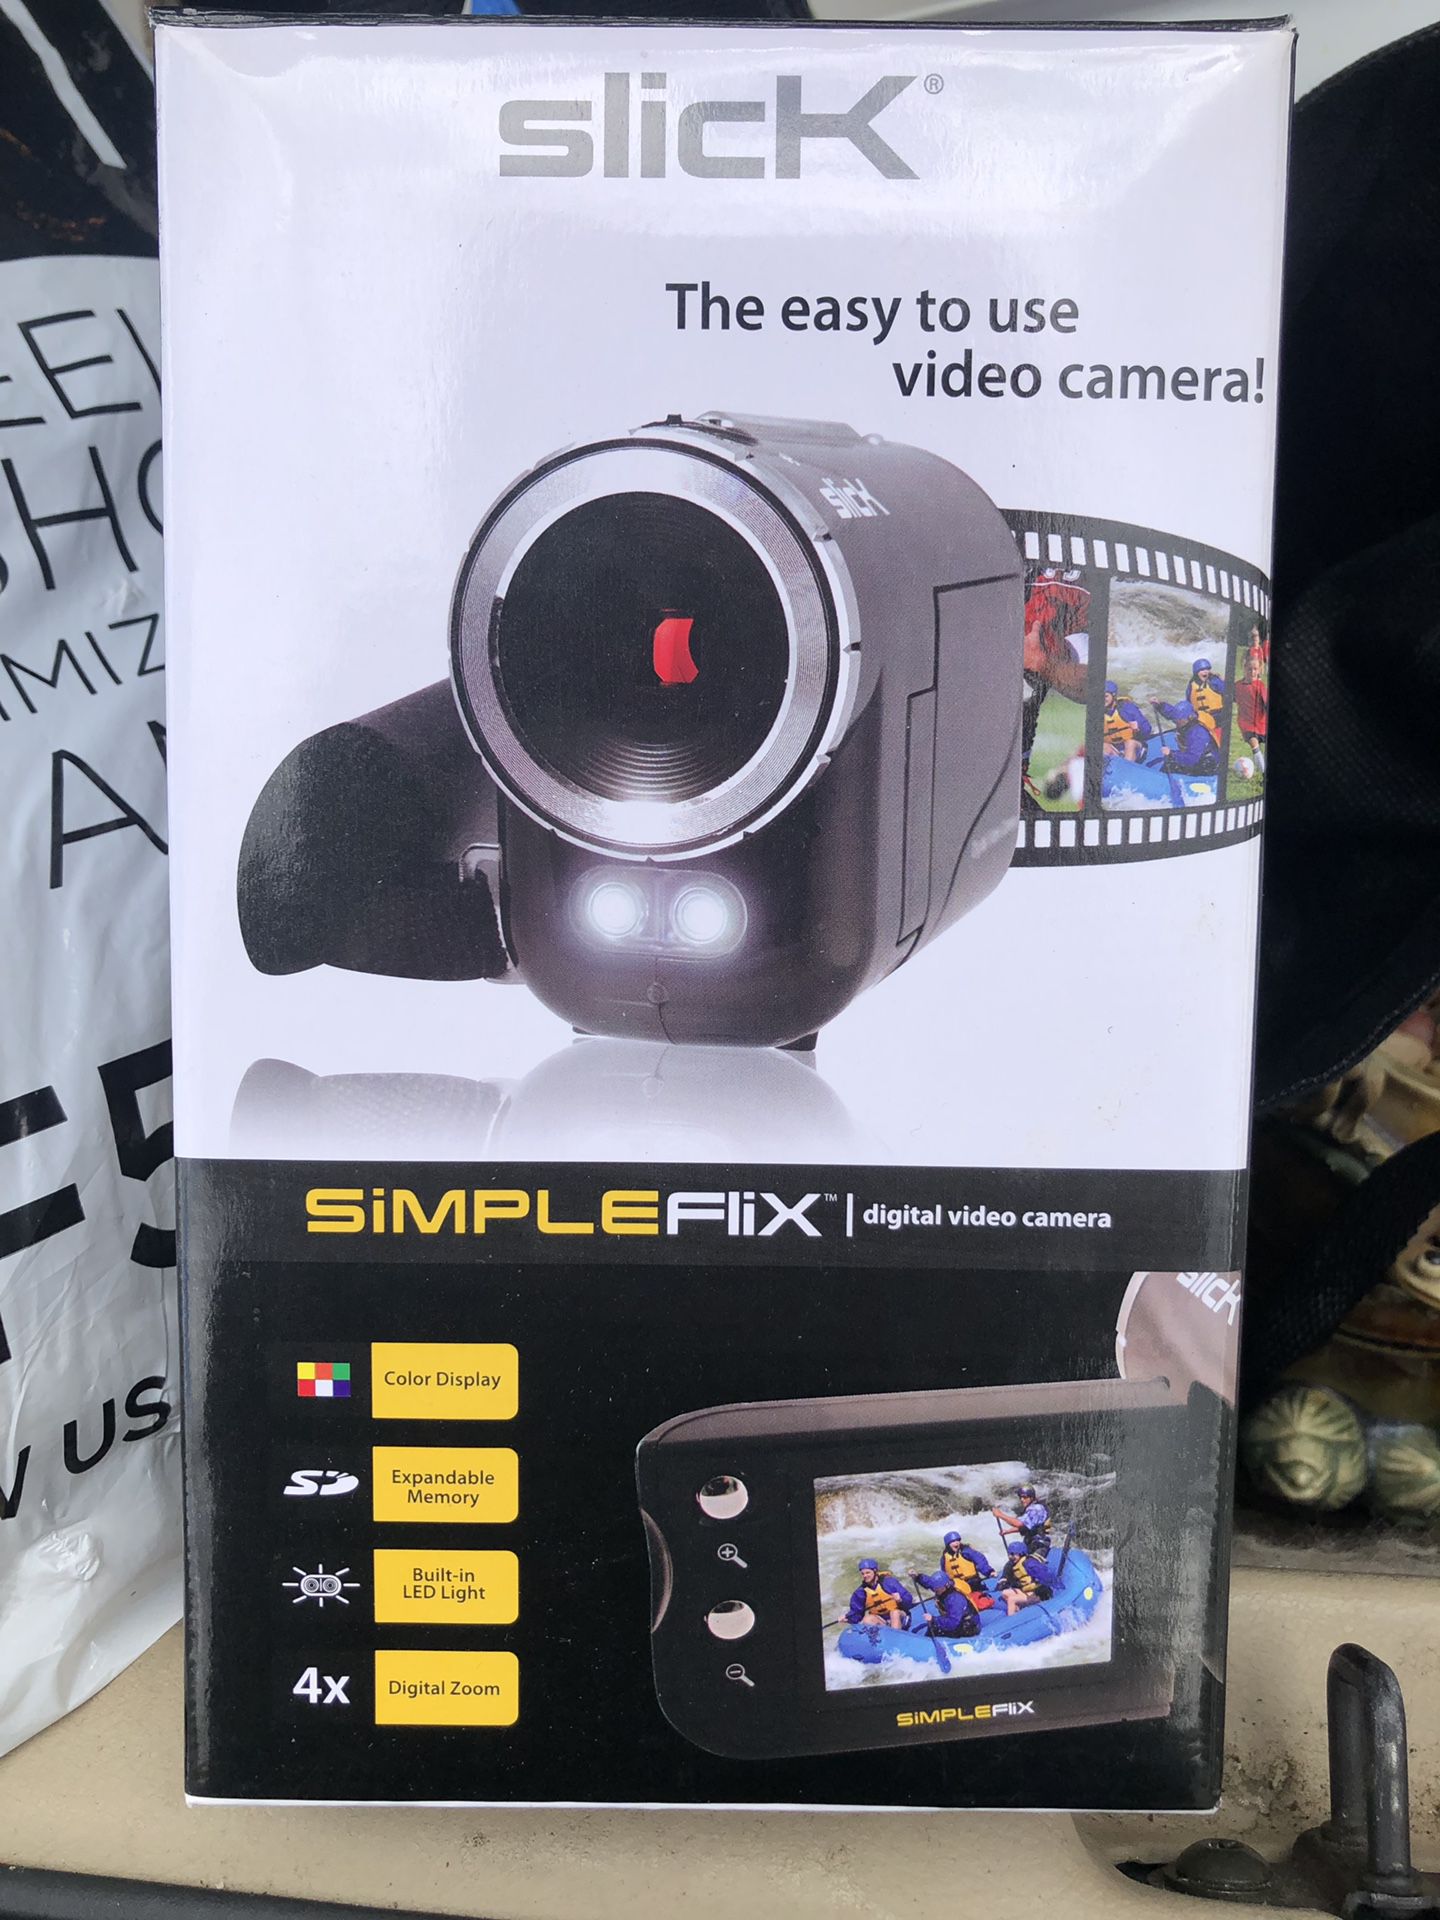 Slick simpleflix digital video camera